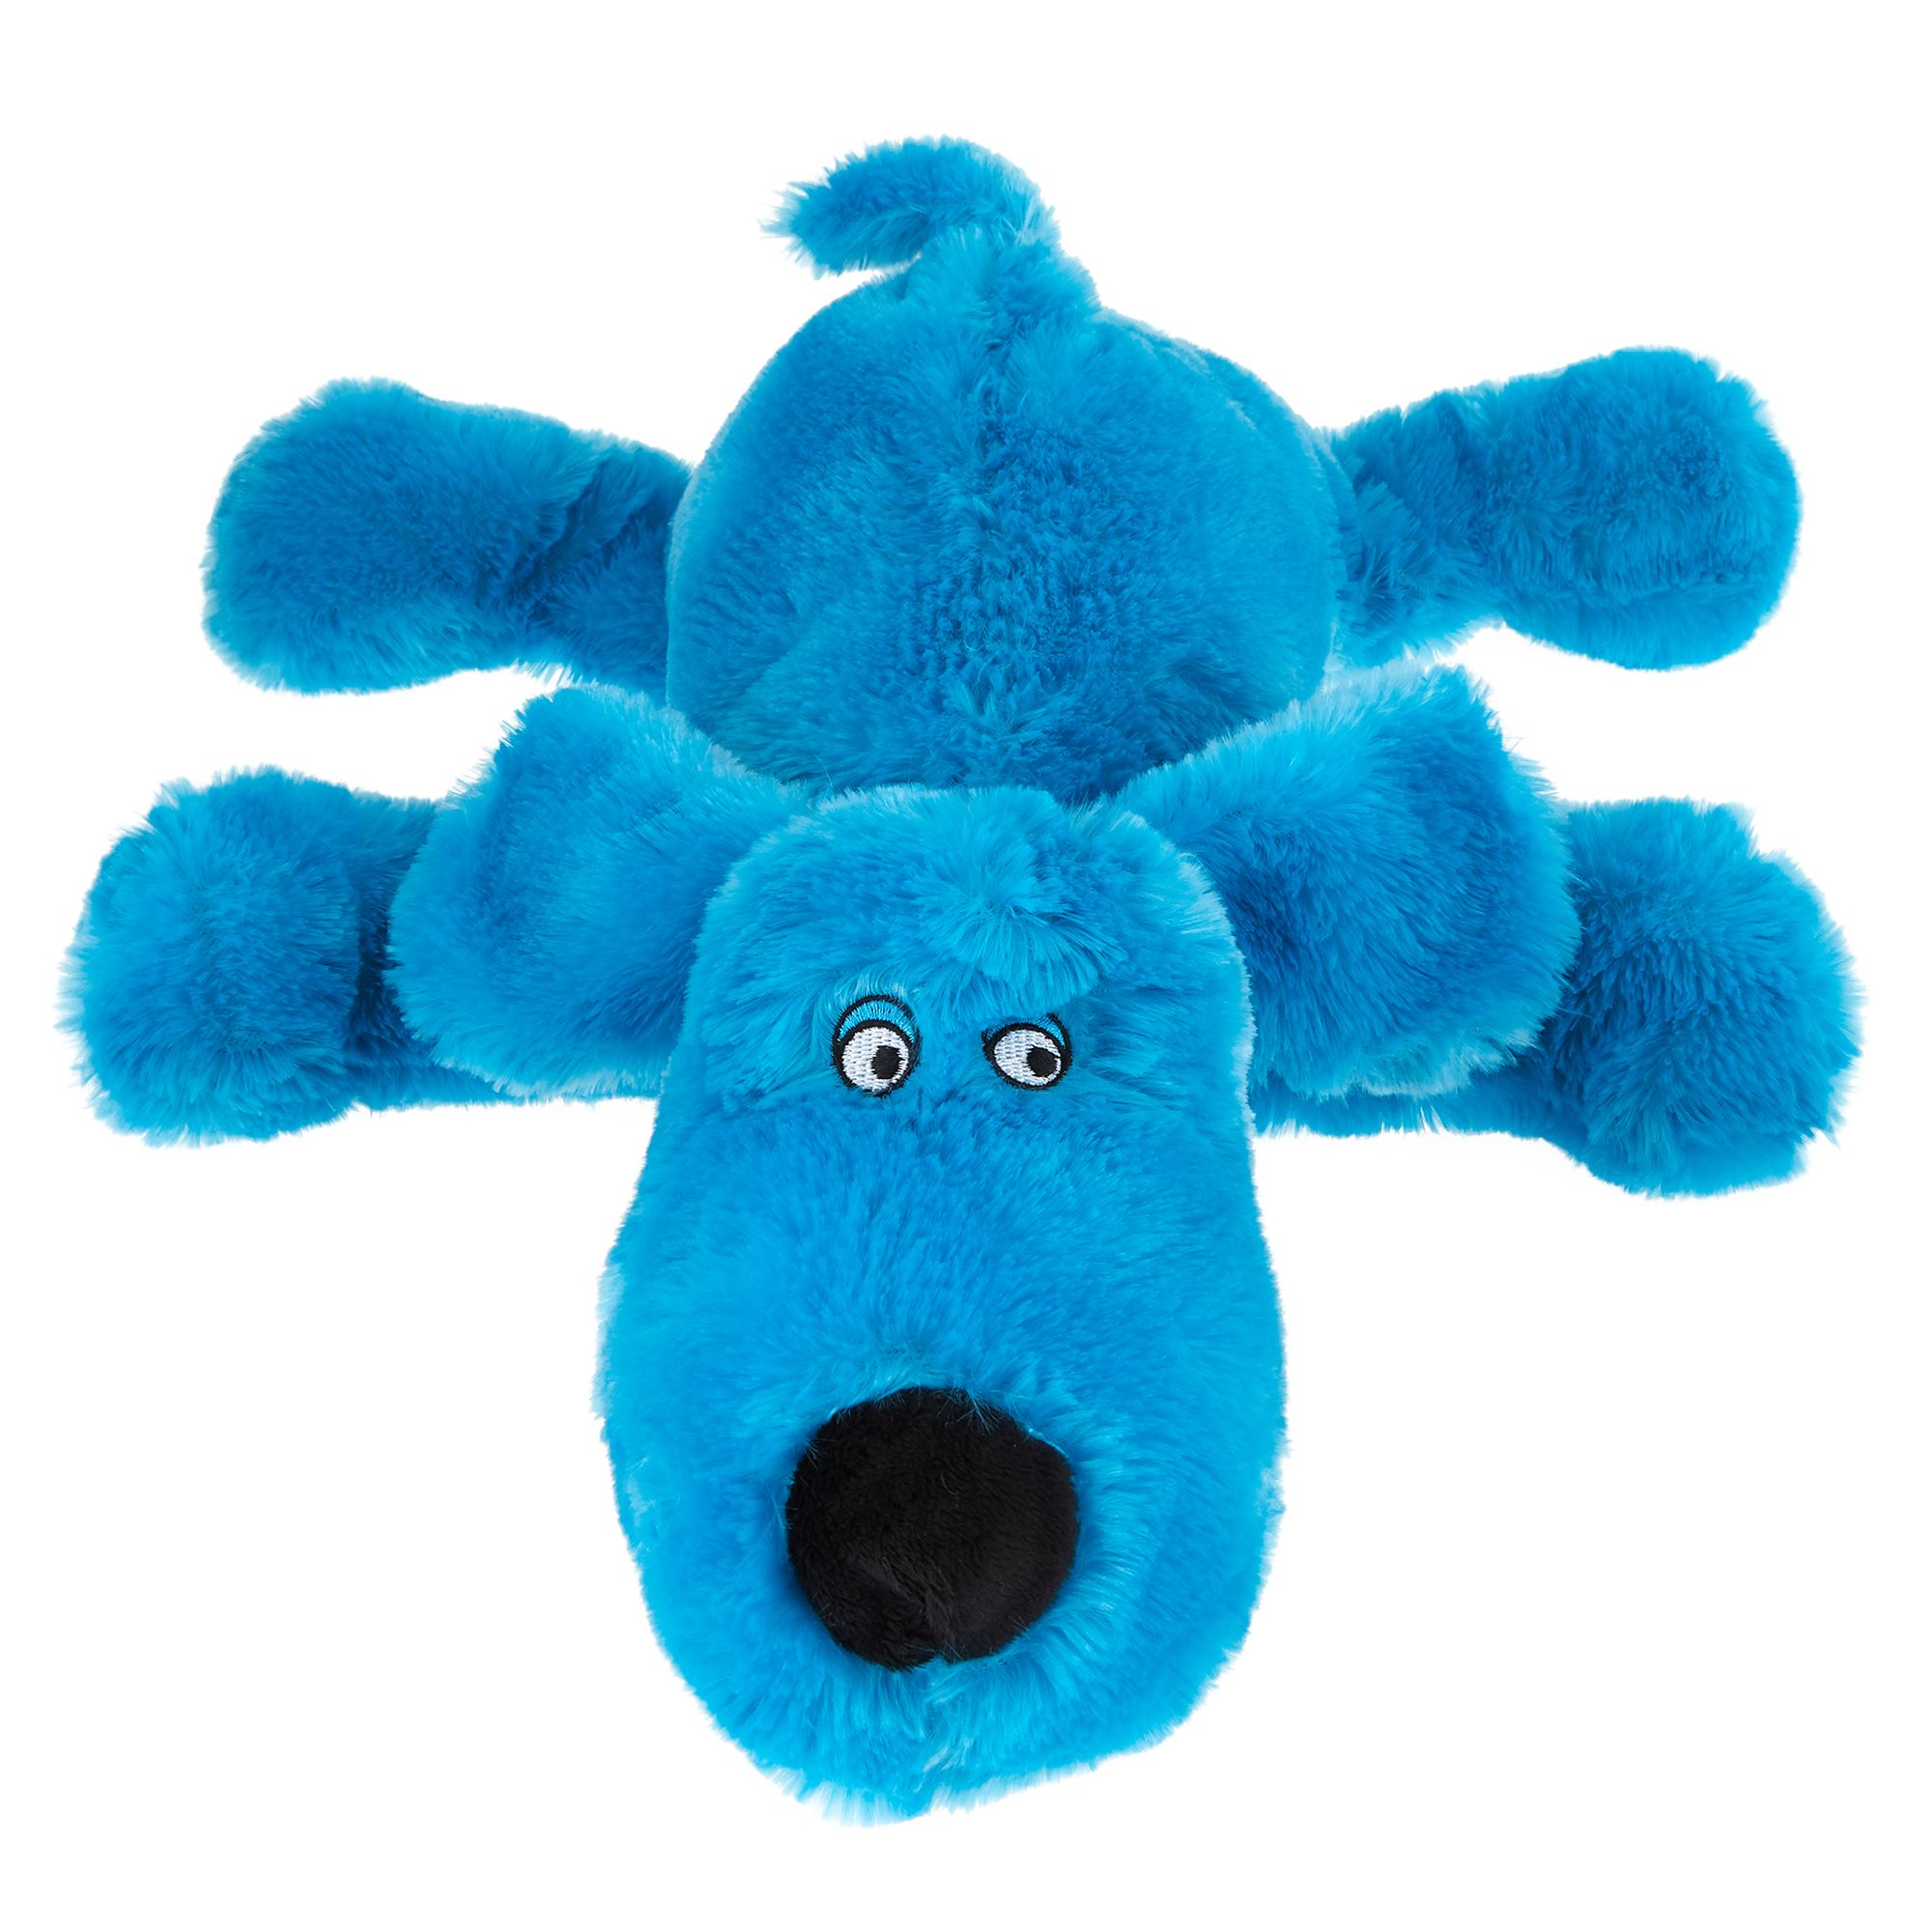 blue stuffed animal dog